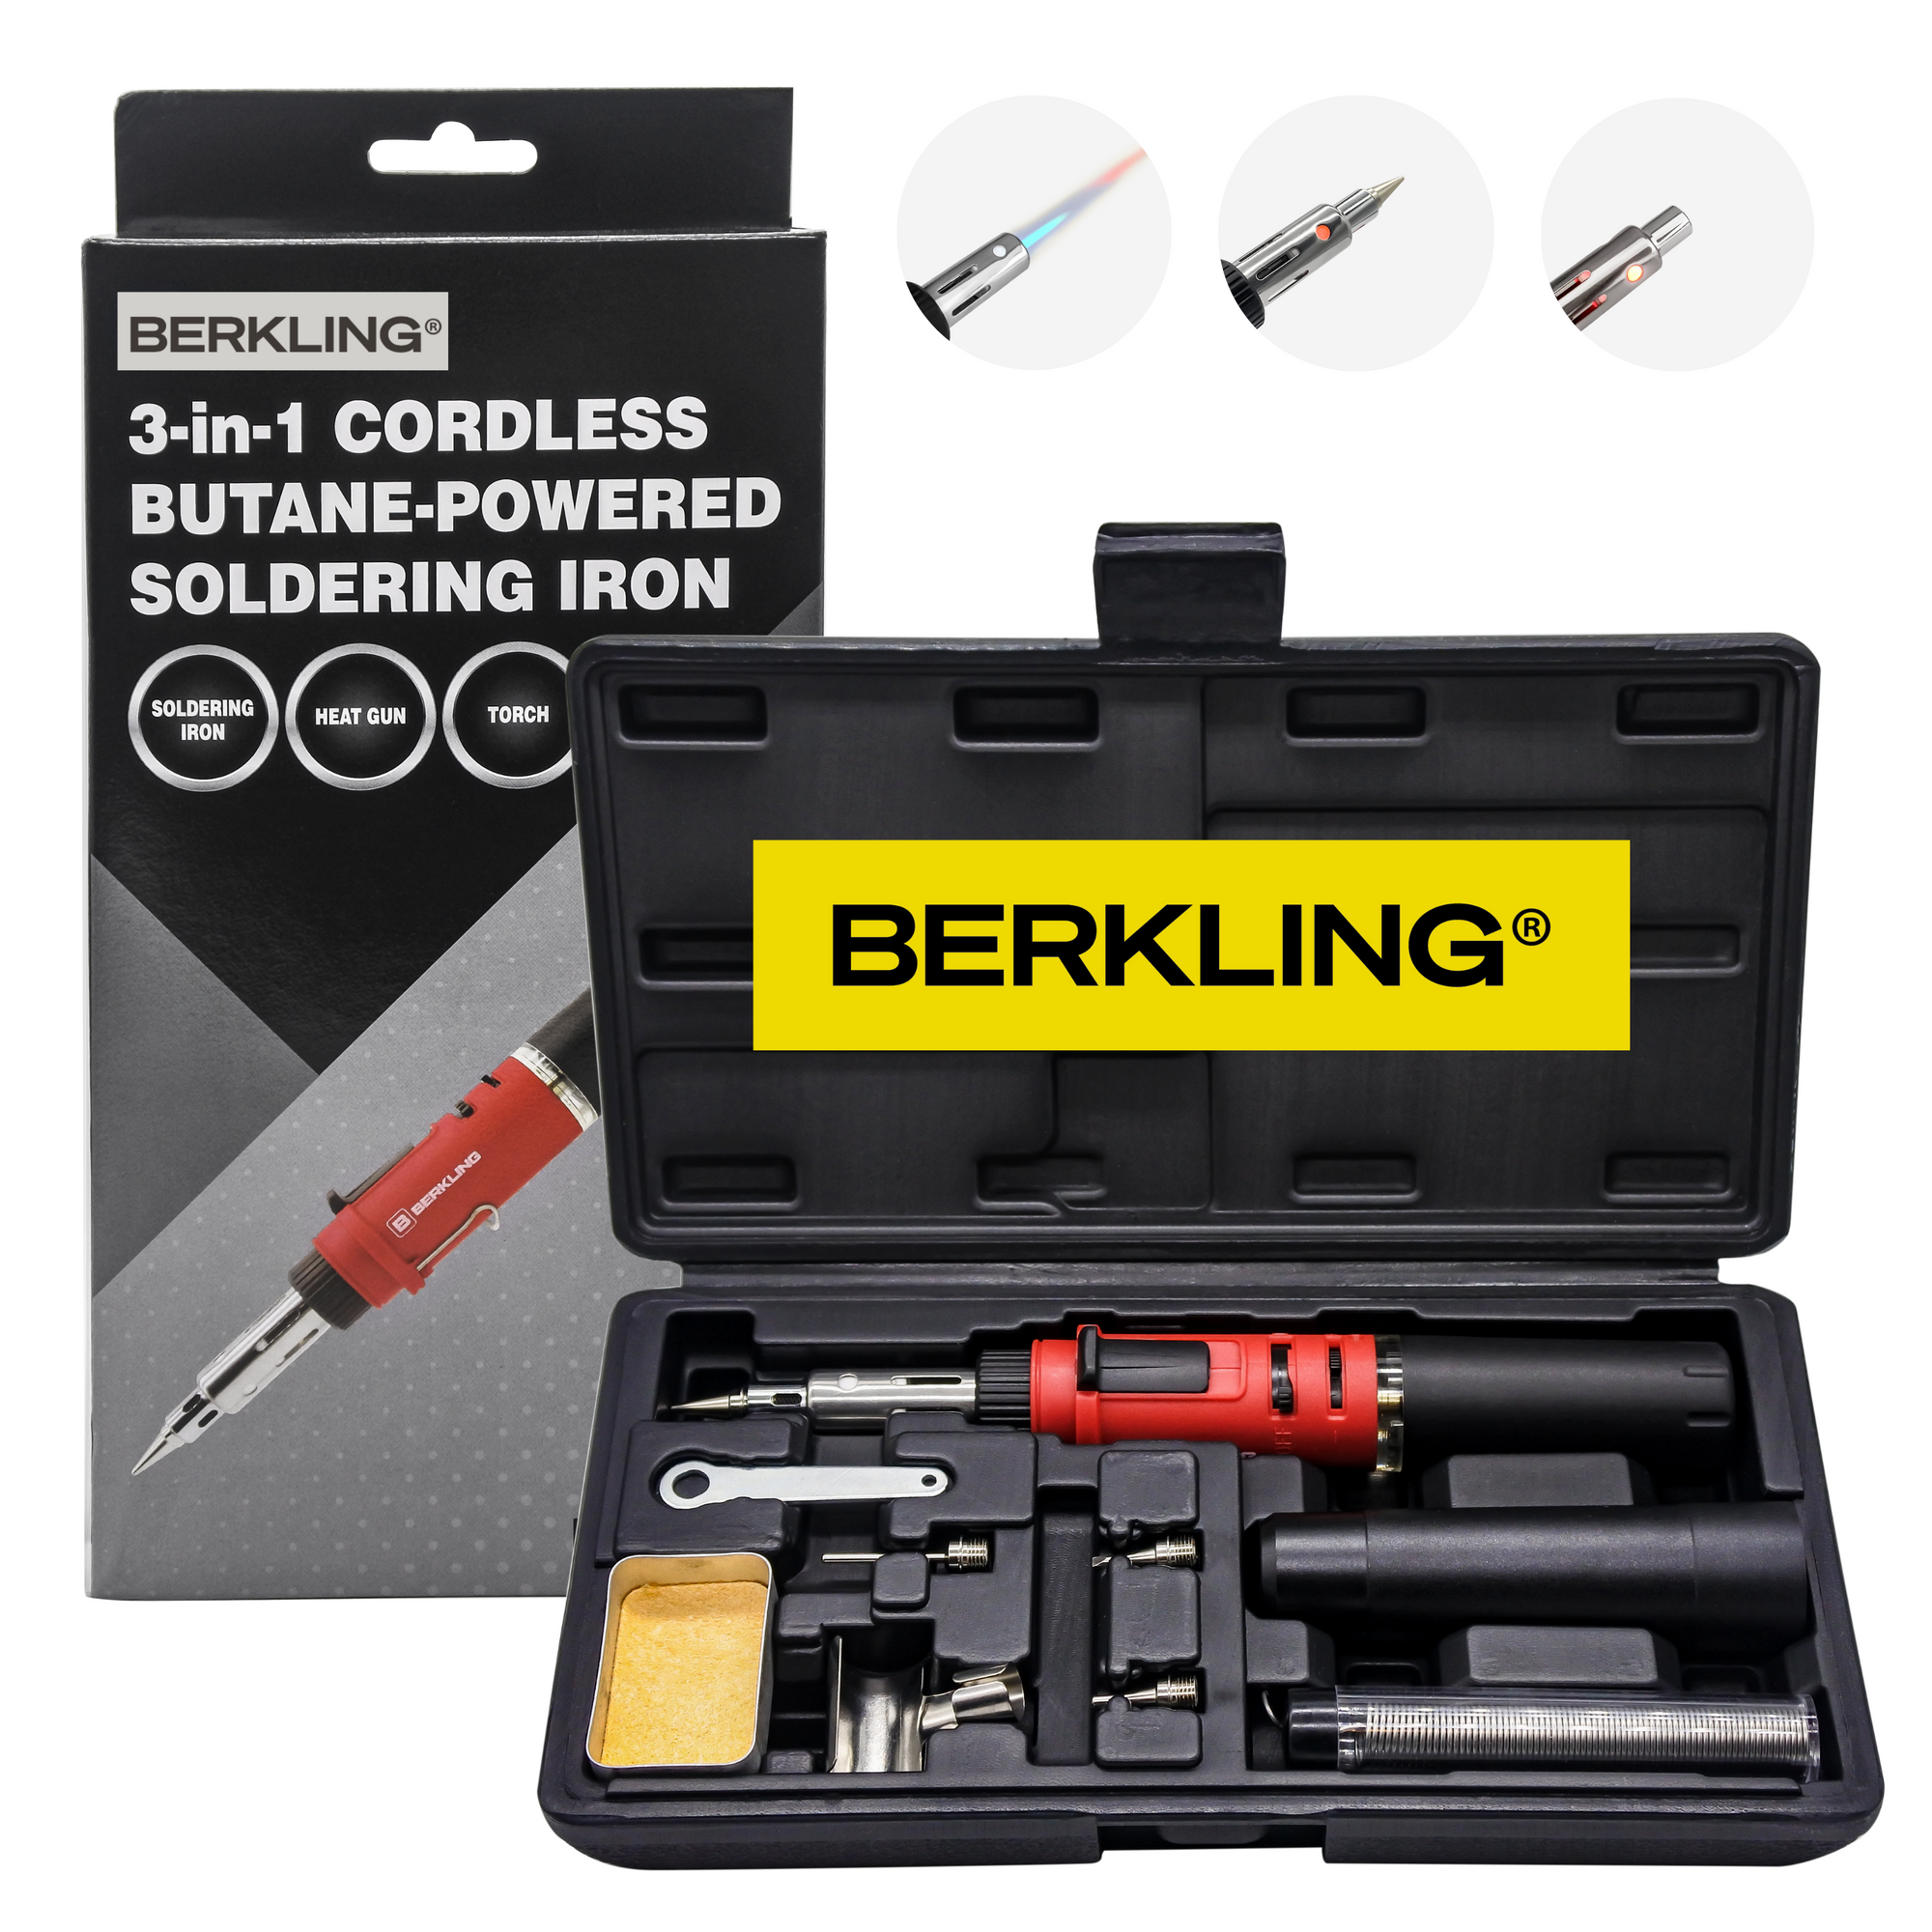 Berkling BSG-568KR Butane Soldering Iron Kit - Cordless Solder Torch Heat Gun, Includes 3 Tips, 15g 60/40 Rosin Core Solder Wire, Mini Wrench, Sponge